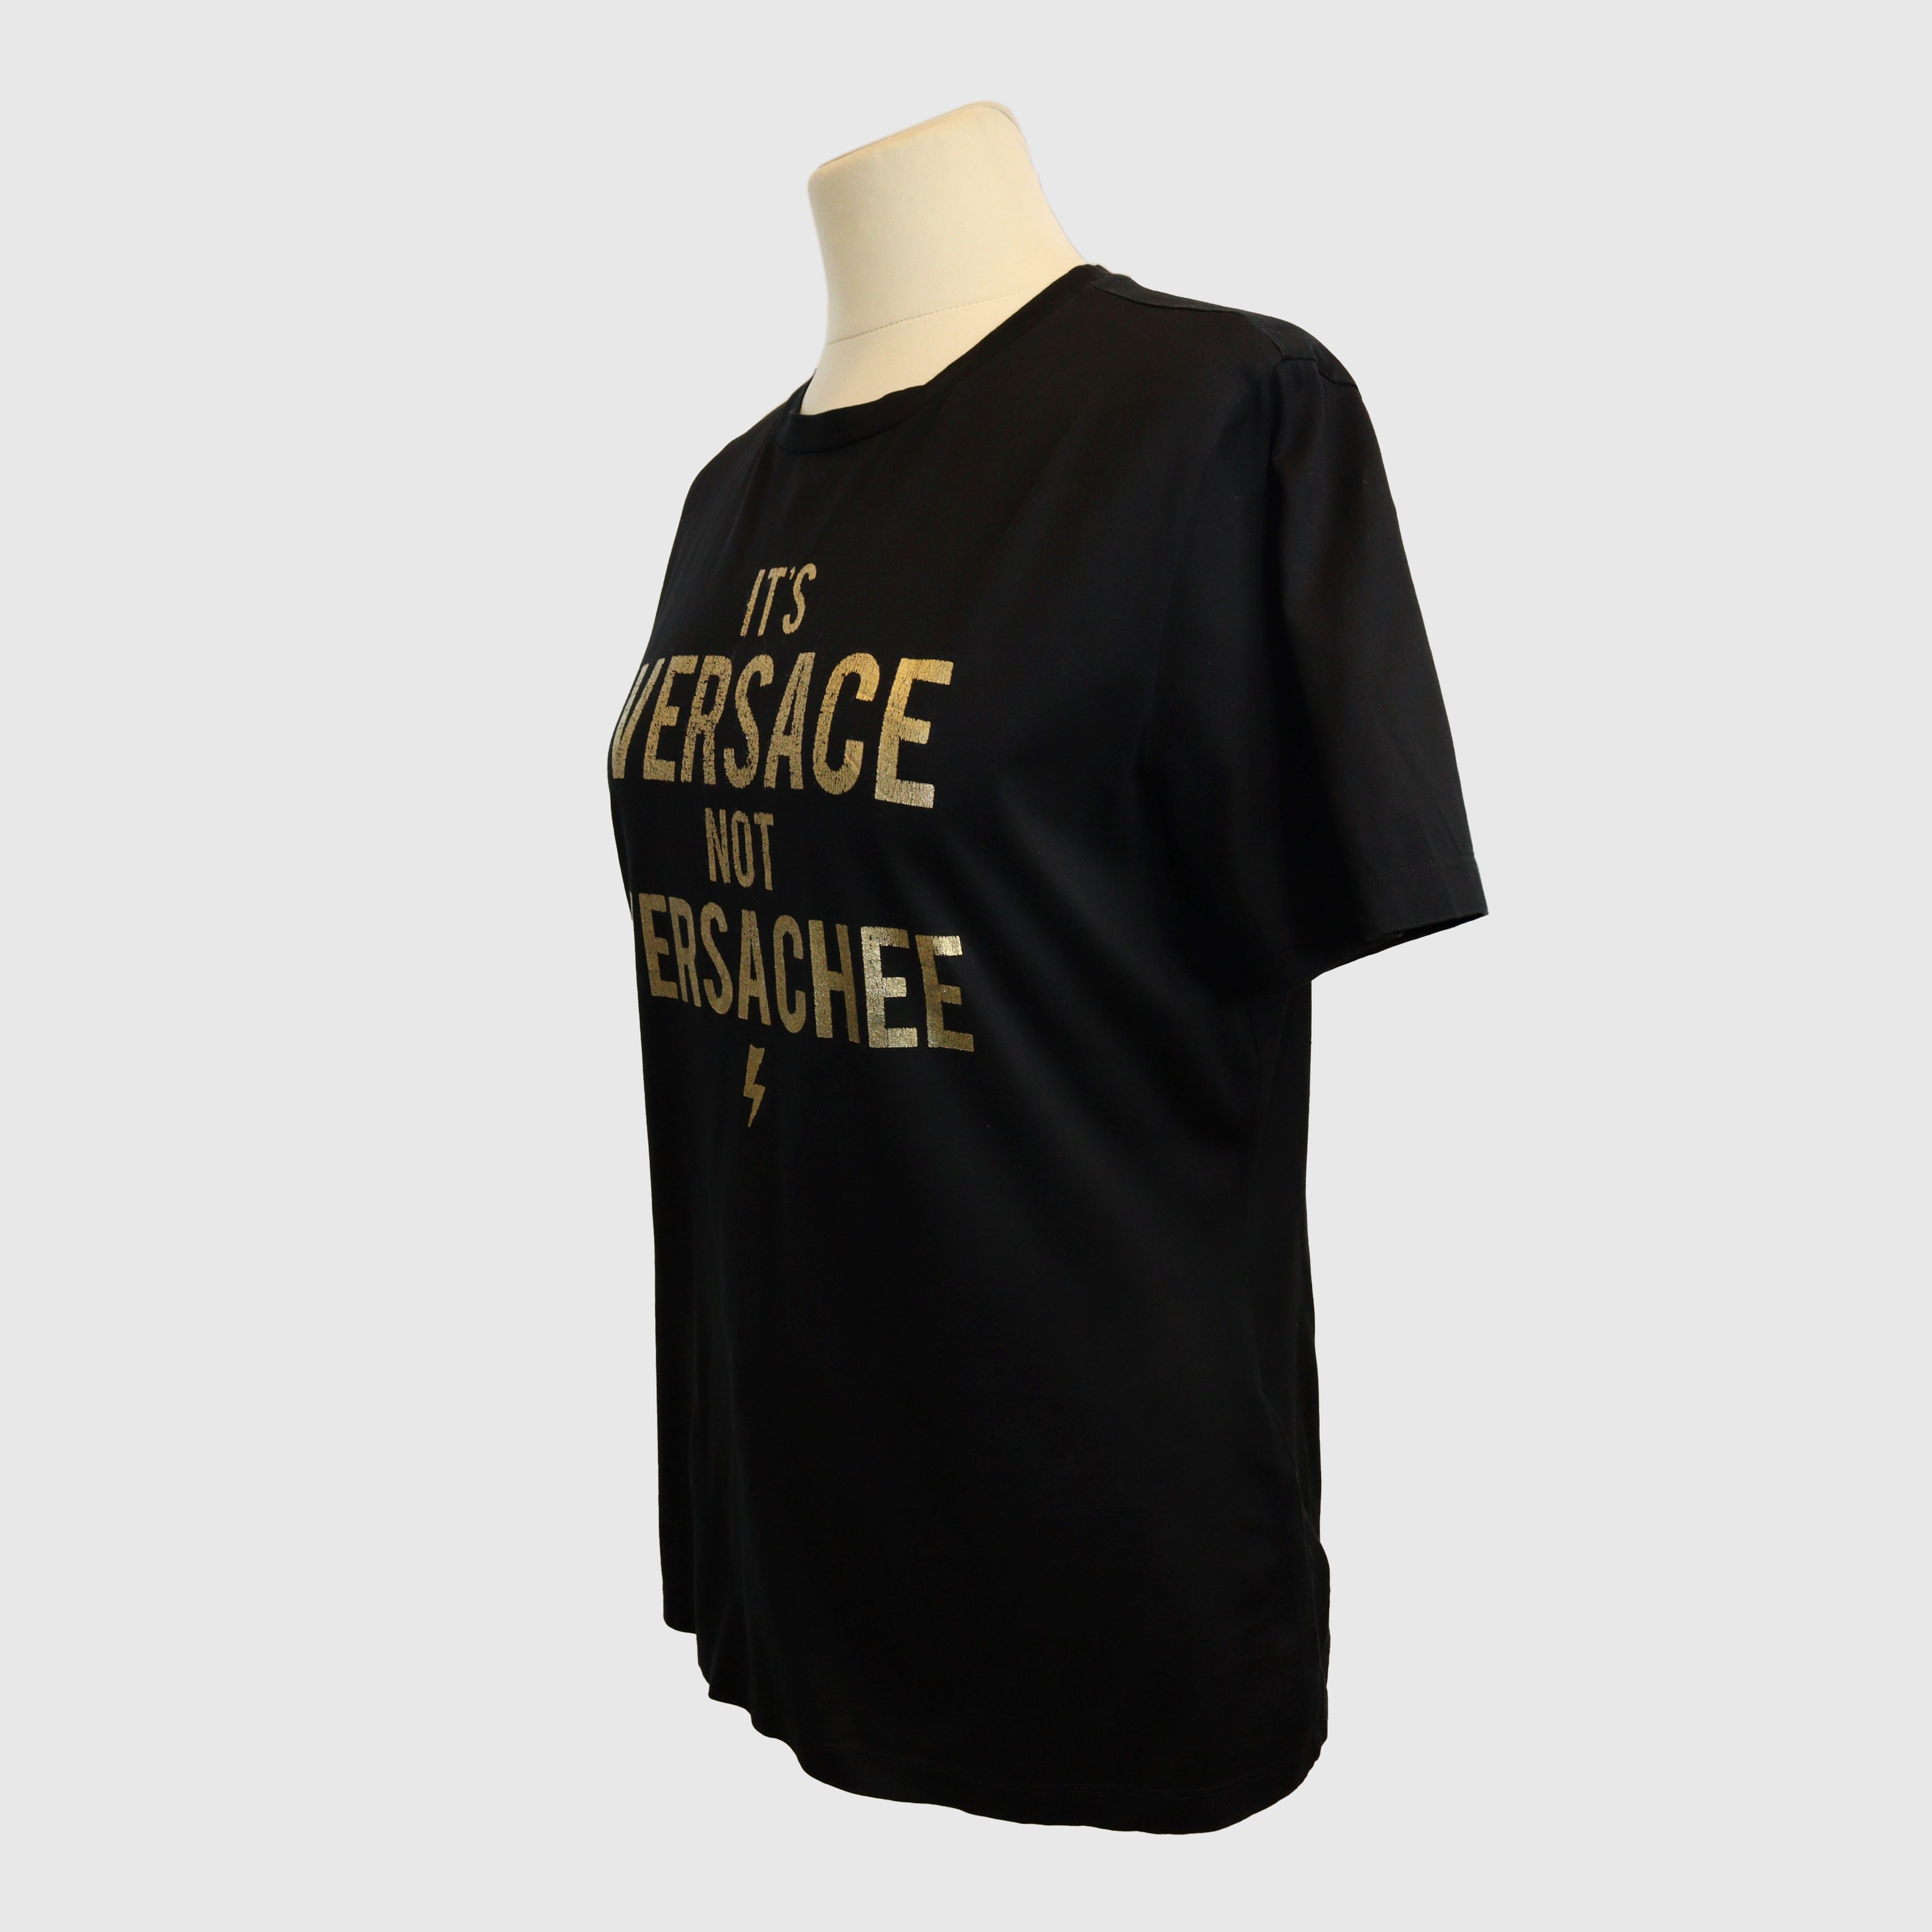 Black/Gold "Its Versace not Versachee" Tshirt Clothing Versace 